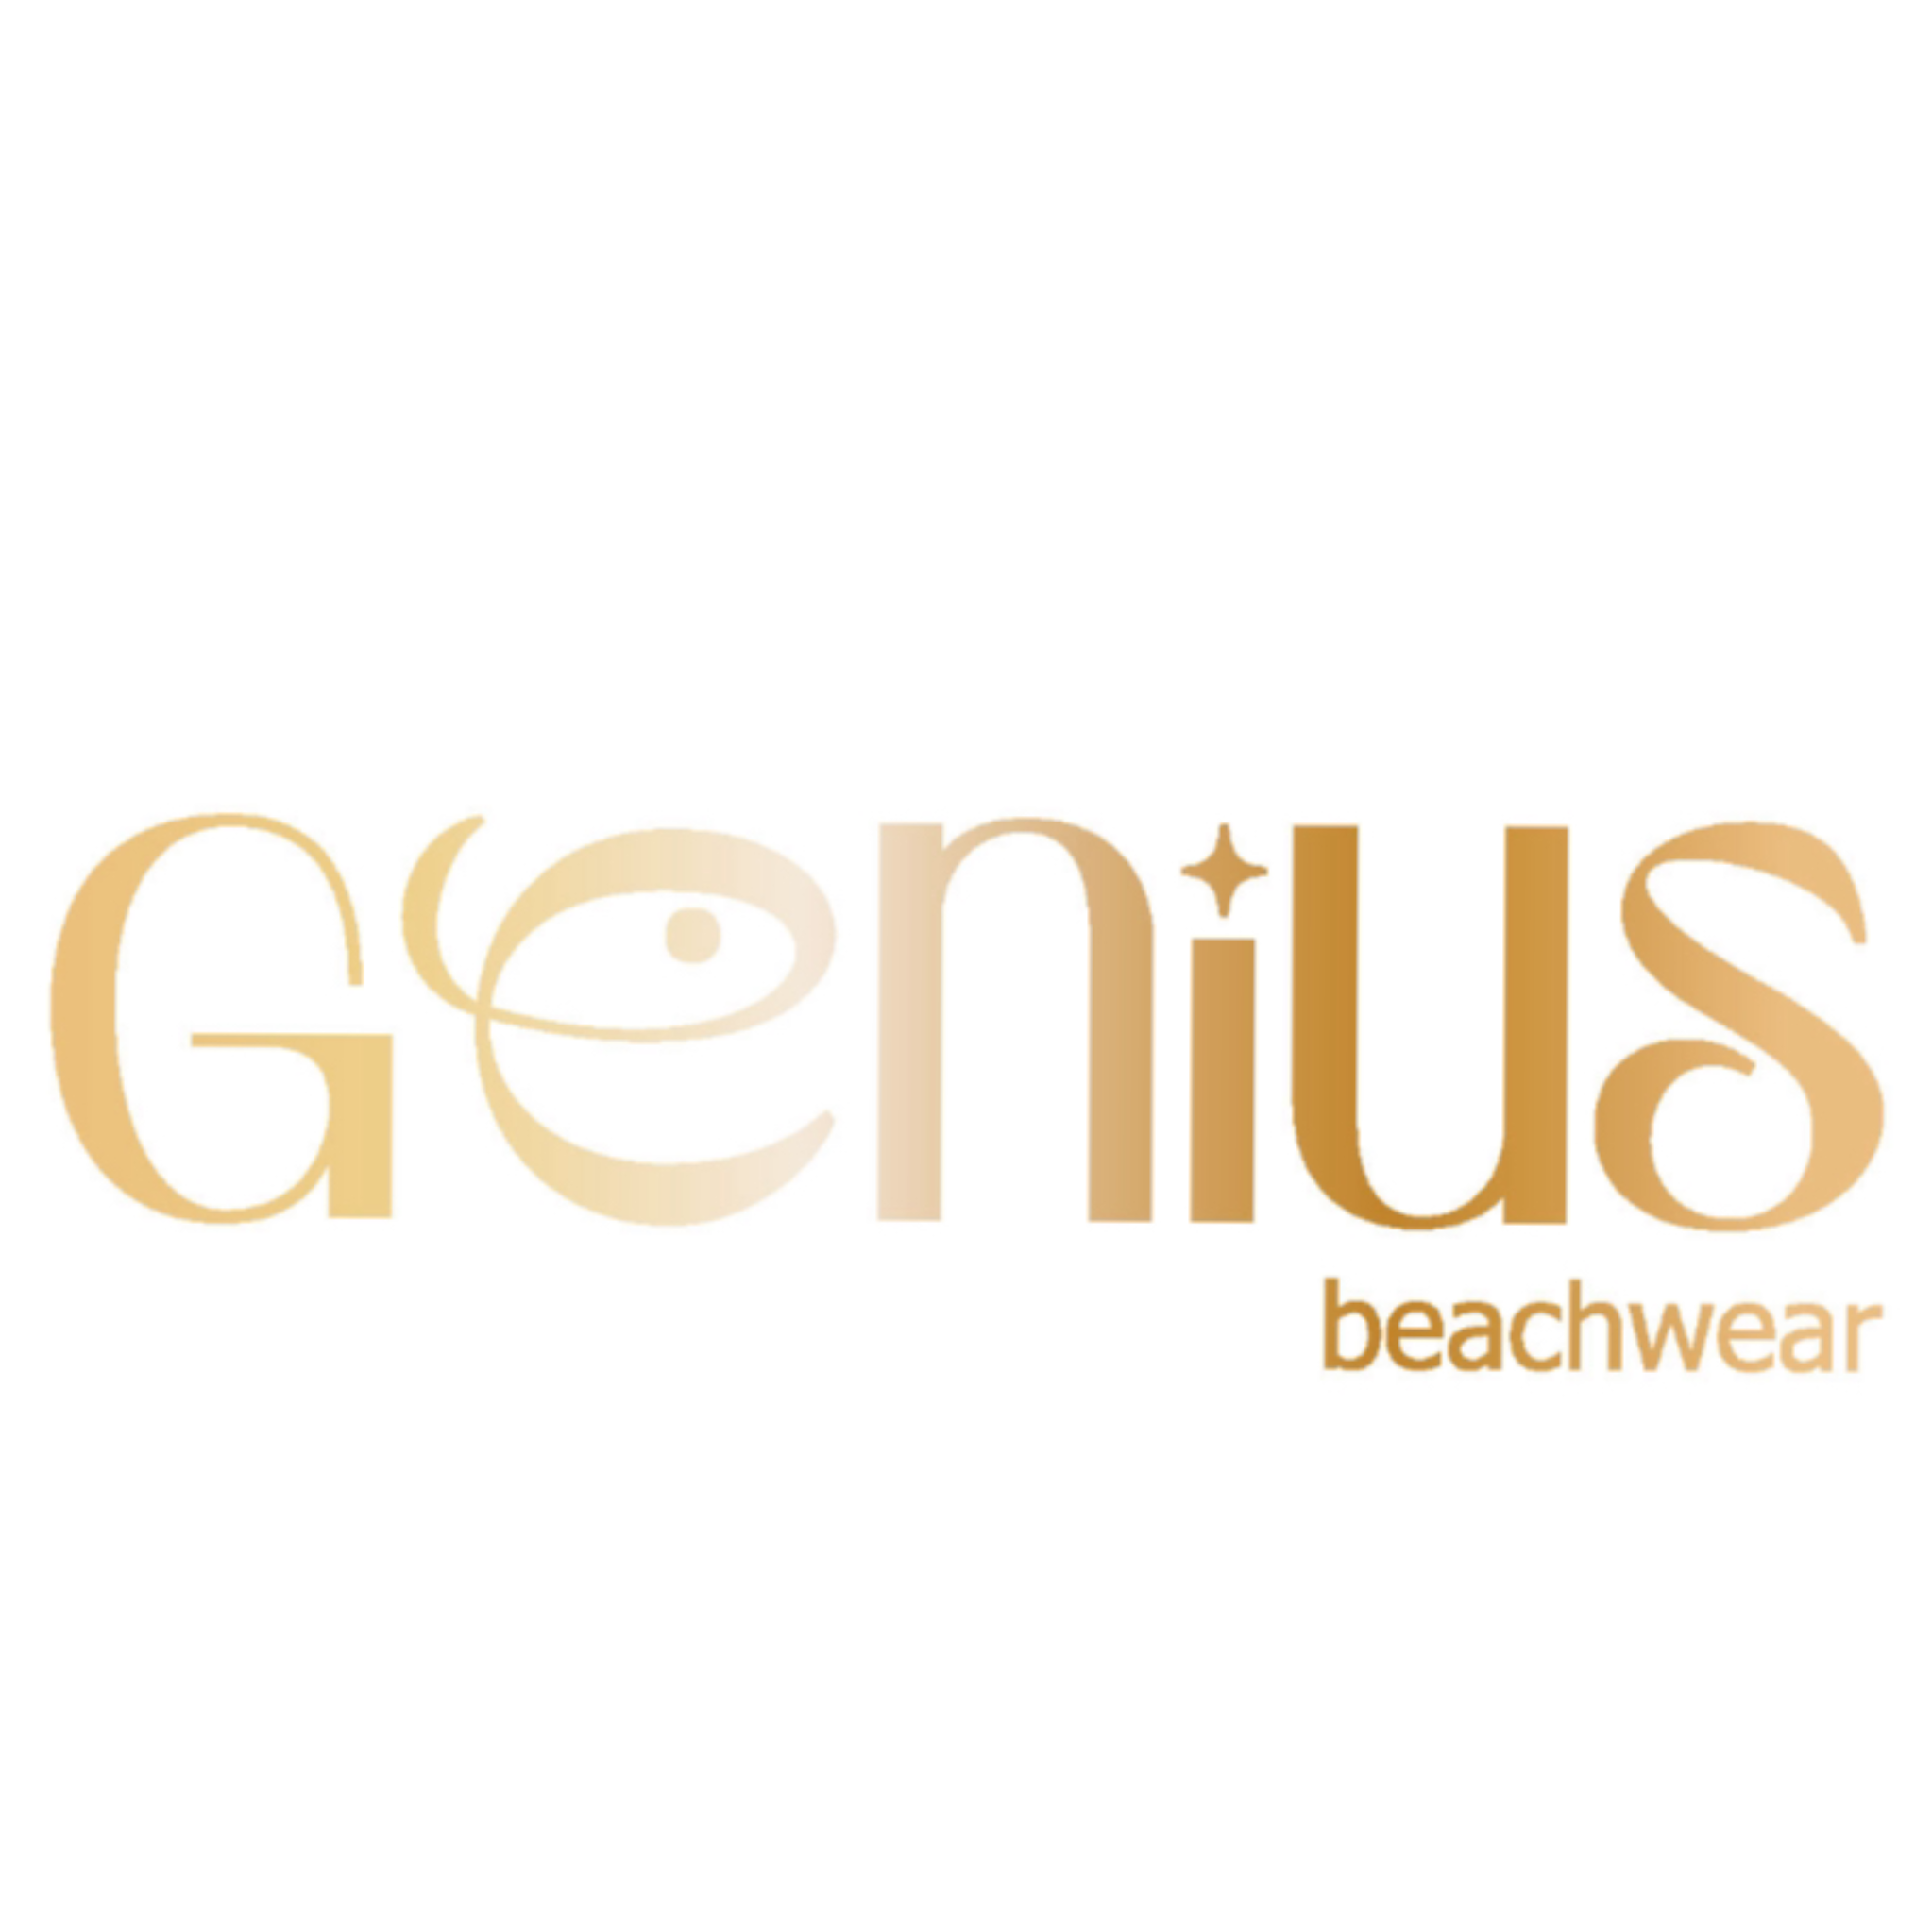 Genius Beachwear